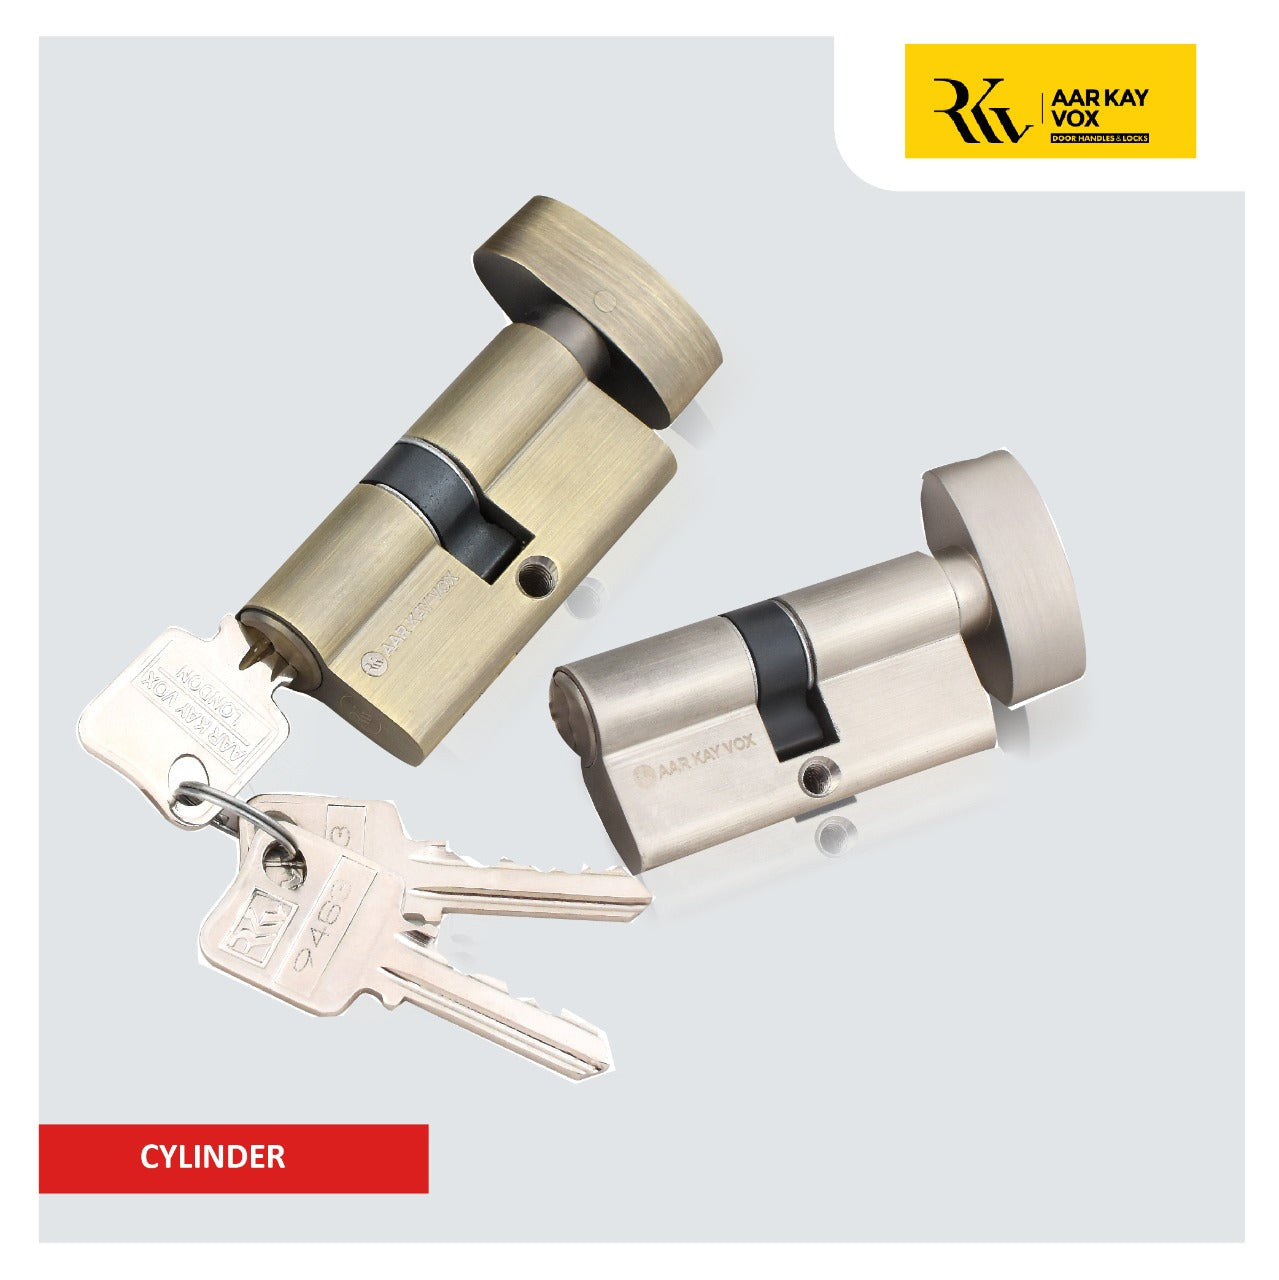 Aar Kay Vox Cylinder Locks - Premium security for your doors. Shop now at M. M. Noorbhoy & Co.